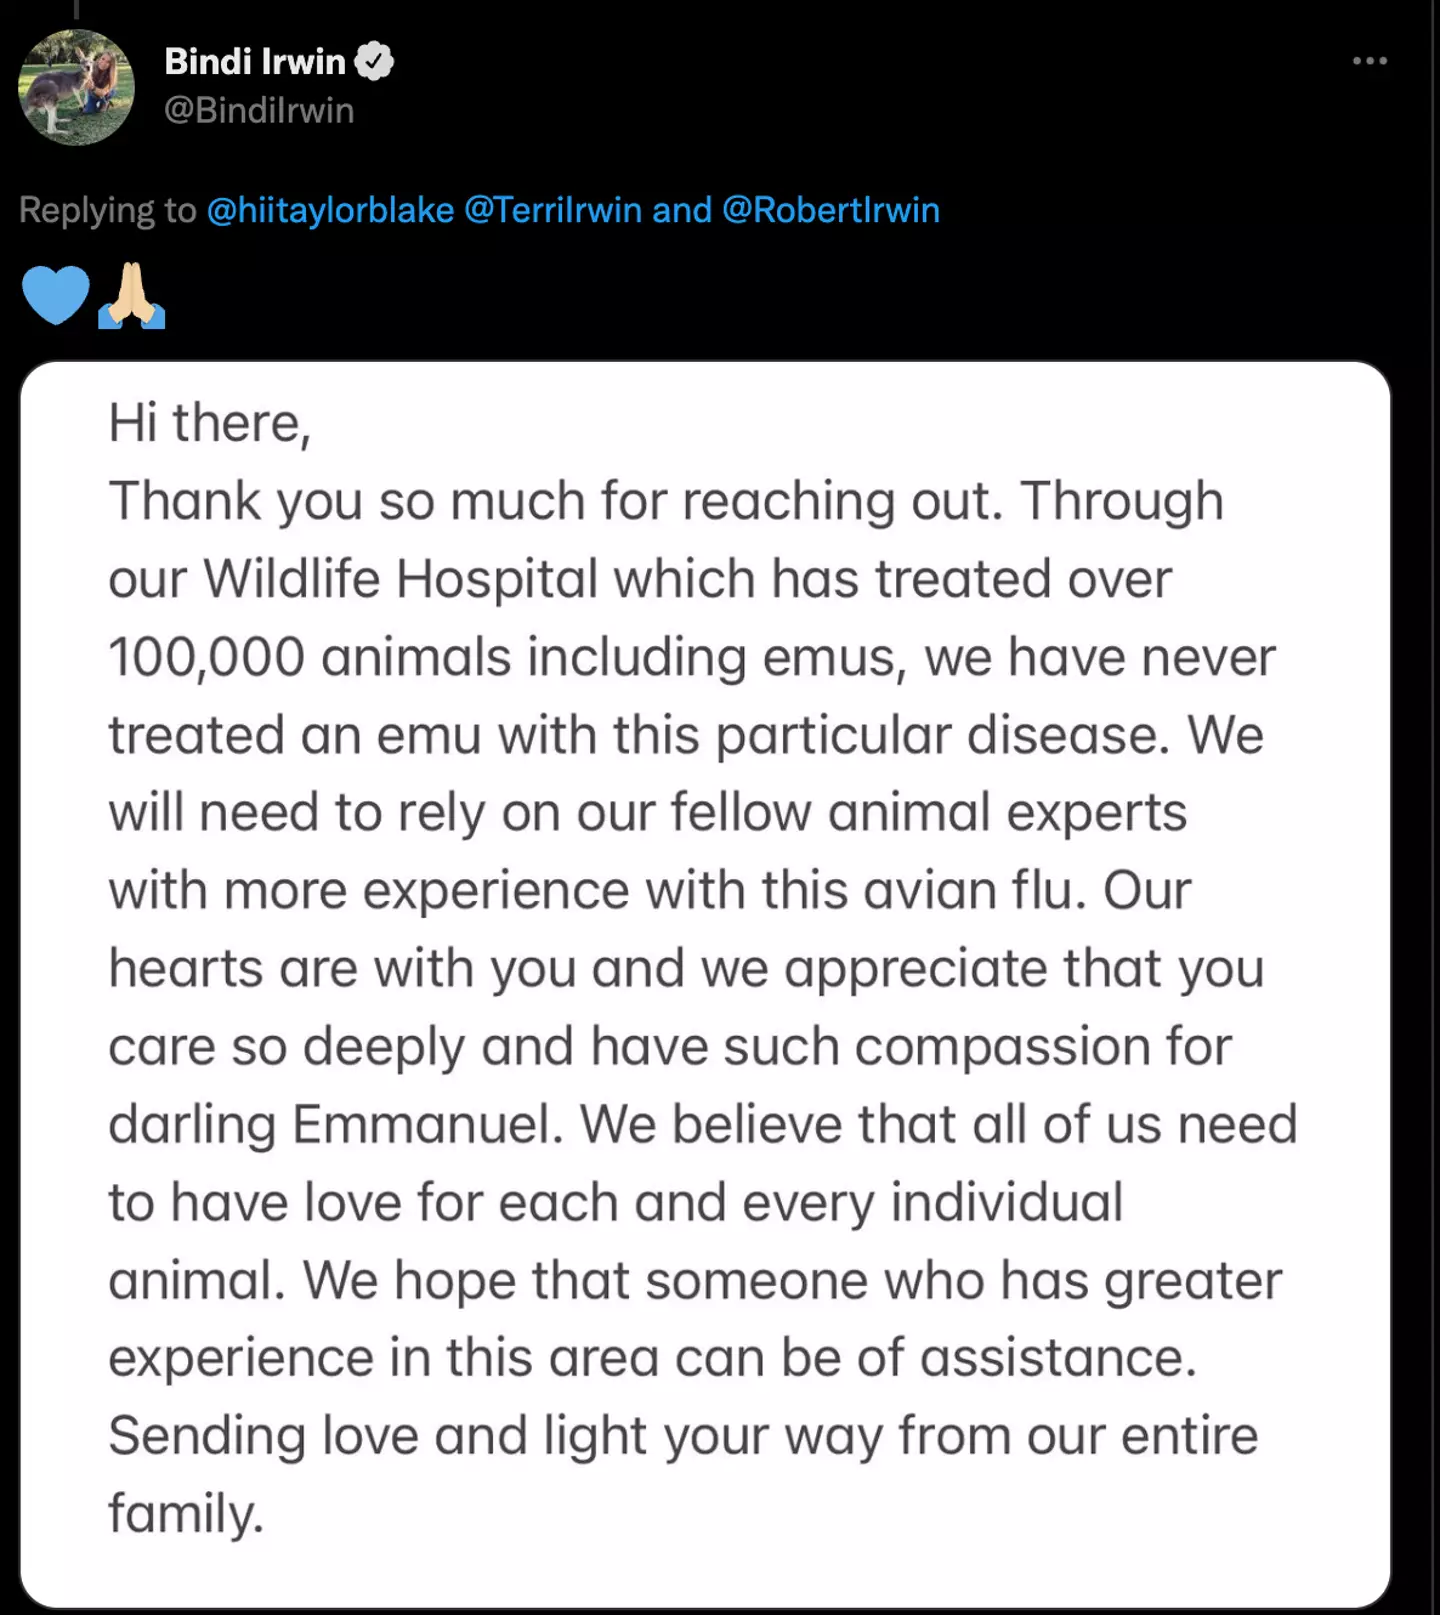 Bindi Irwin replied to Blake with a statement on Twitter.